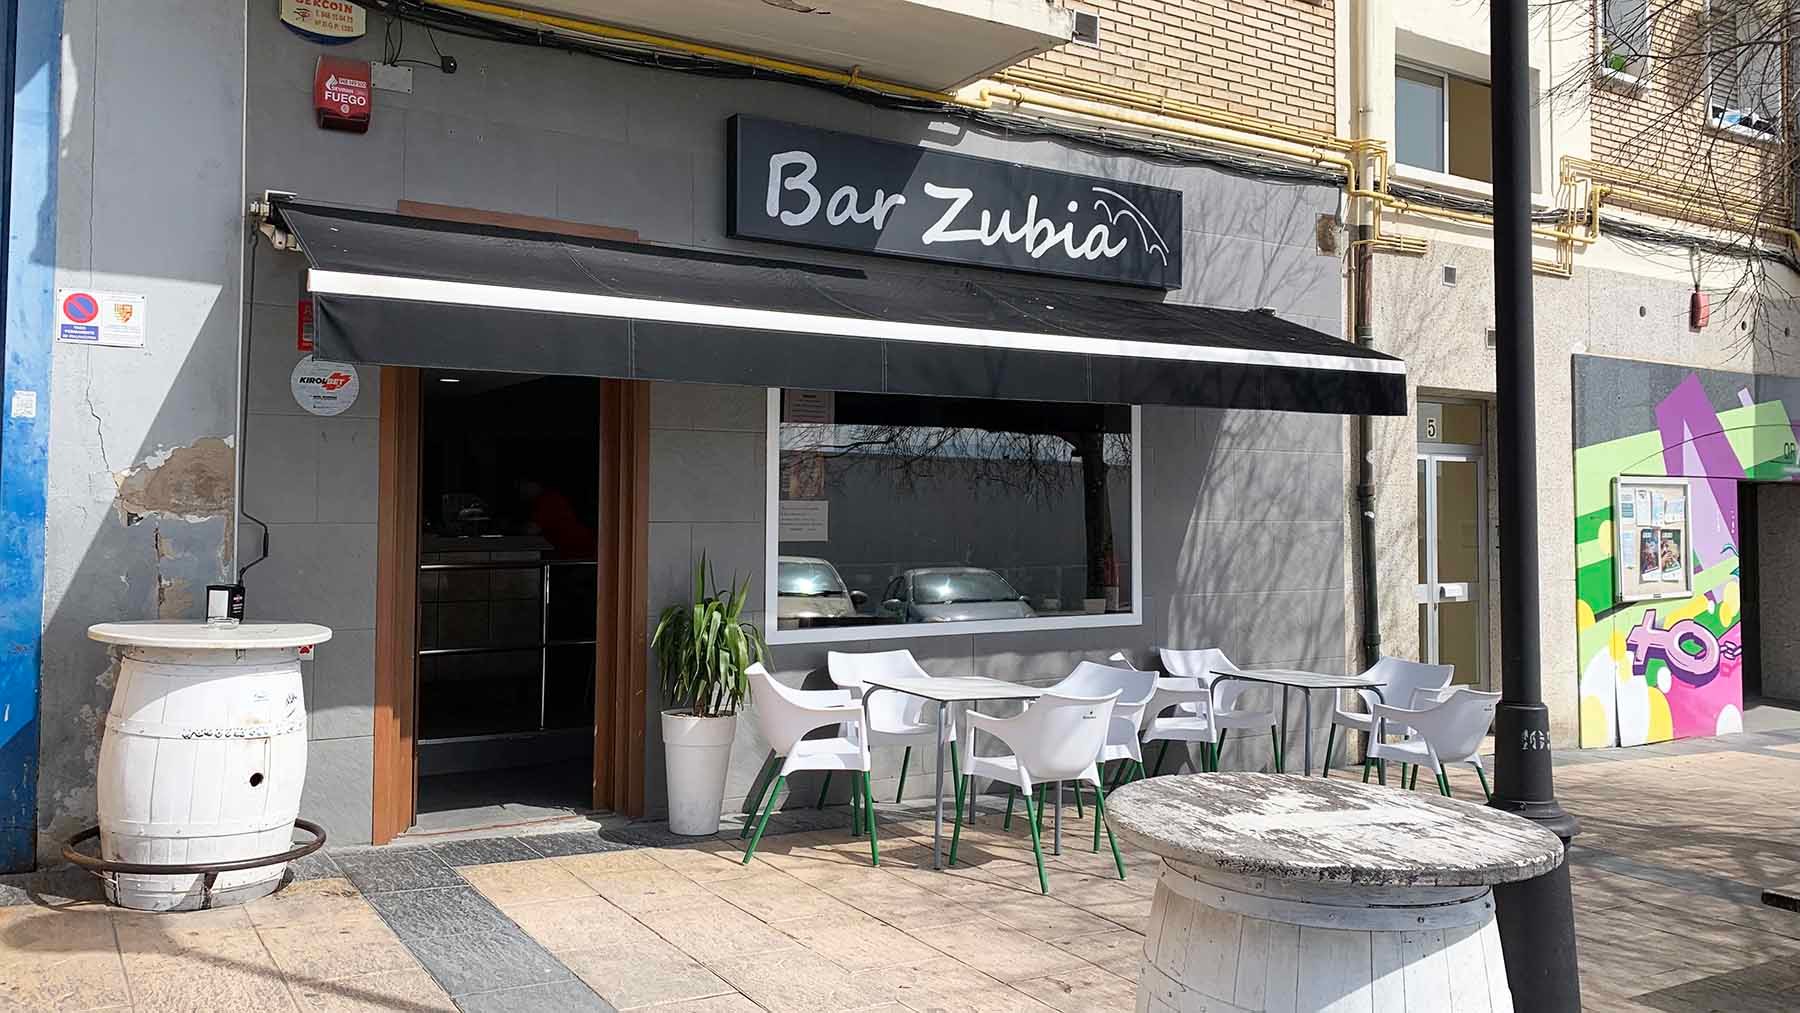 El bar Zubia en la calle Ipertegui 5 en localidad de Orcoyen. Navarra.com